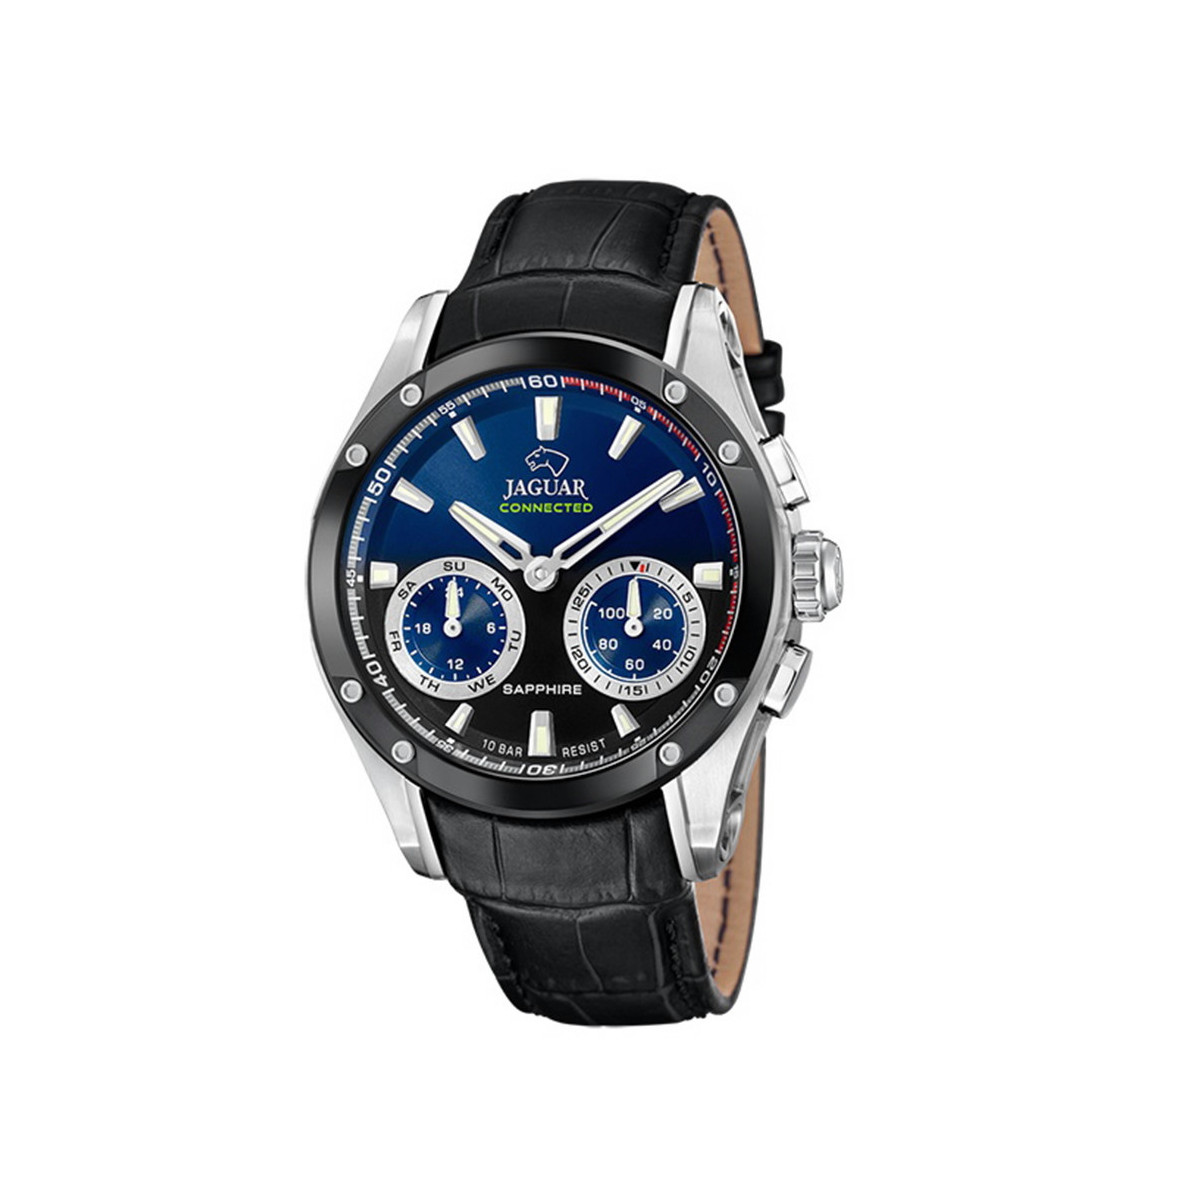 Bremont Jaguar MKI And MKII Non-Limited Edition Jaguar Collaboration Watches  | aBlogtoWatch